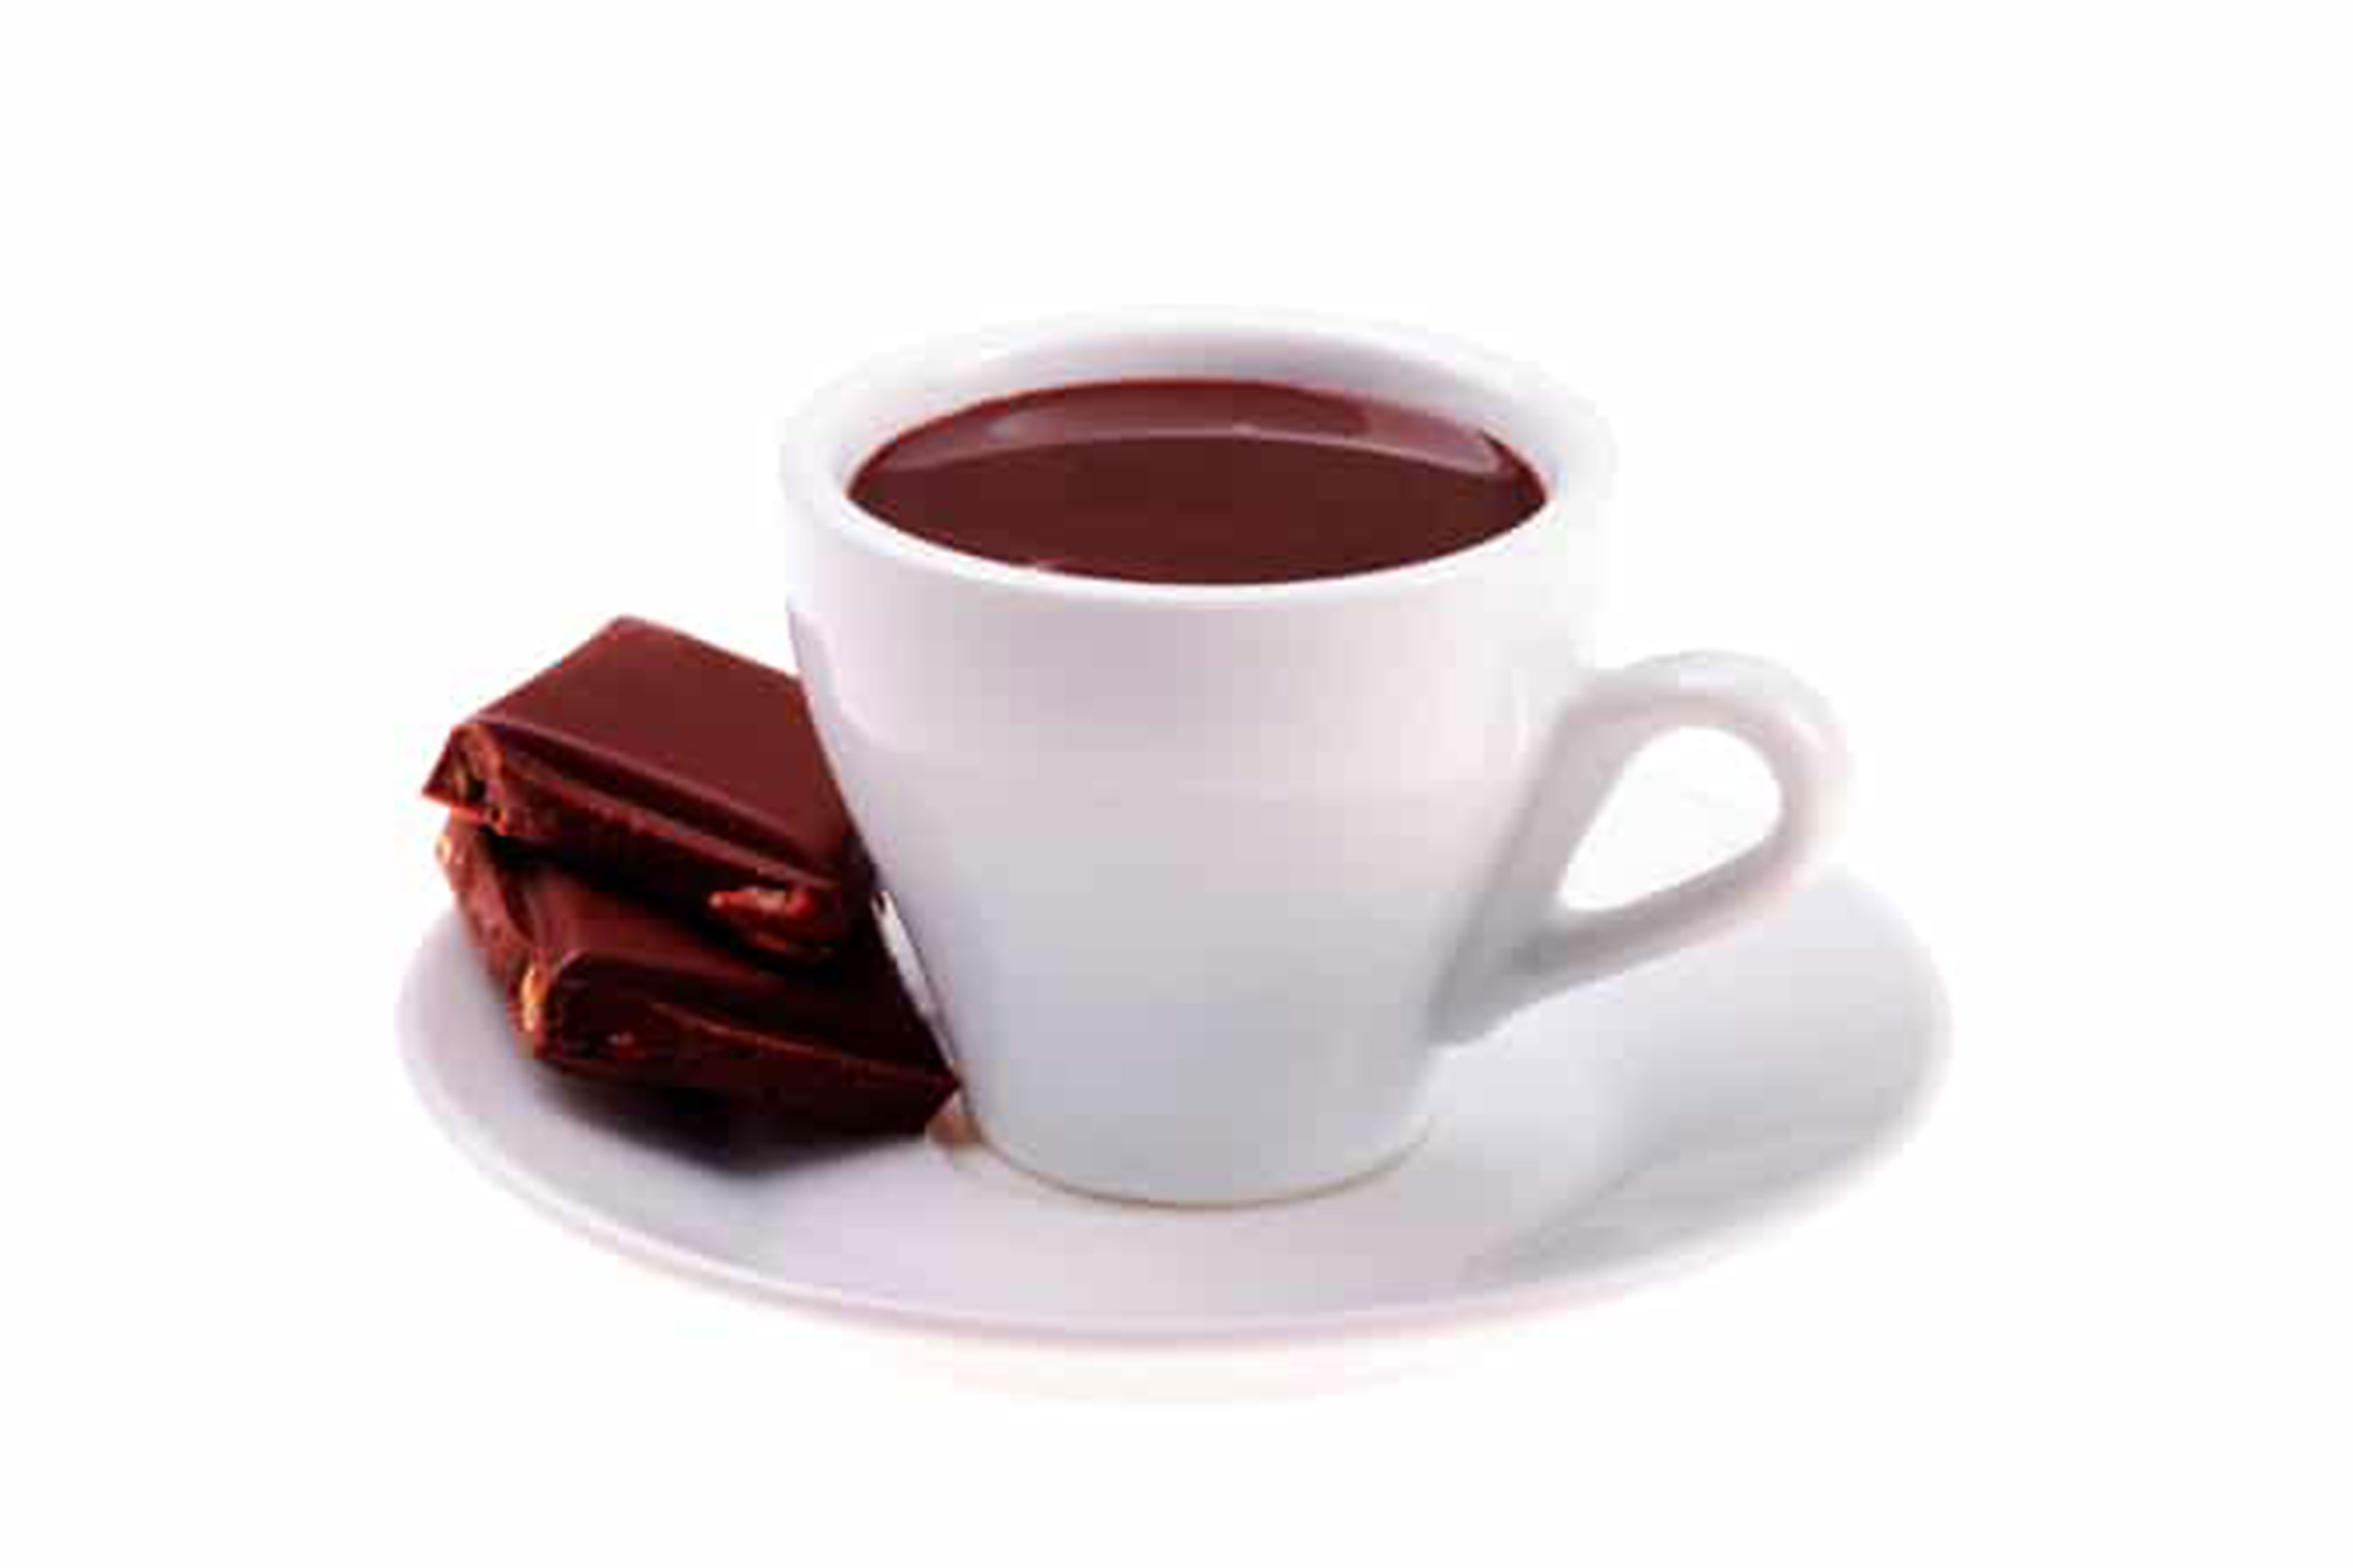 Hot Chocolate Drink